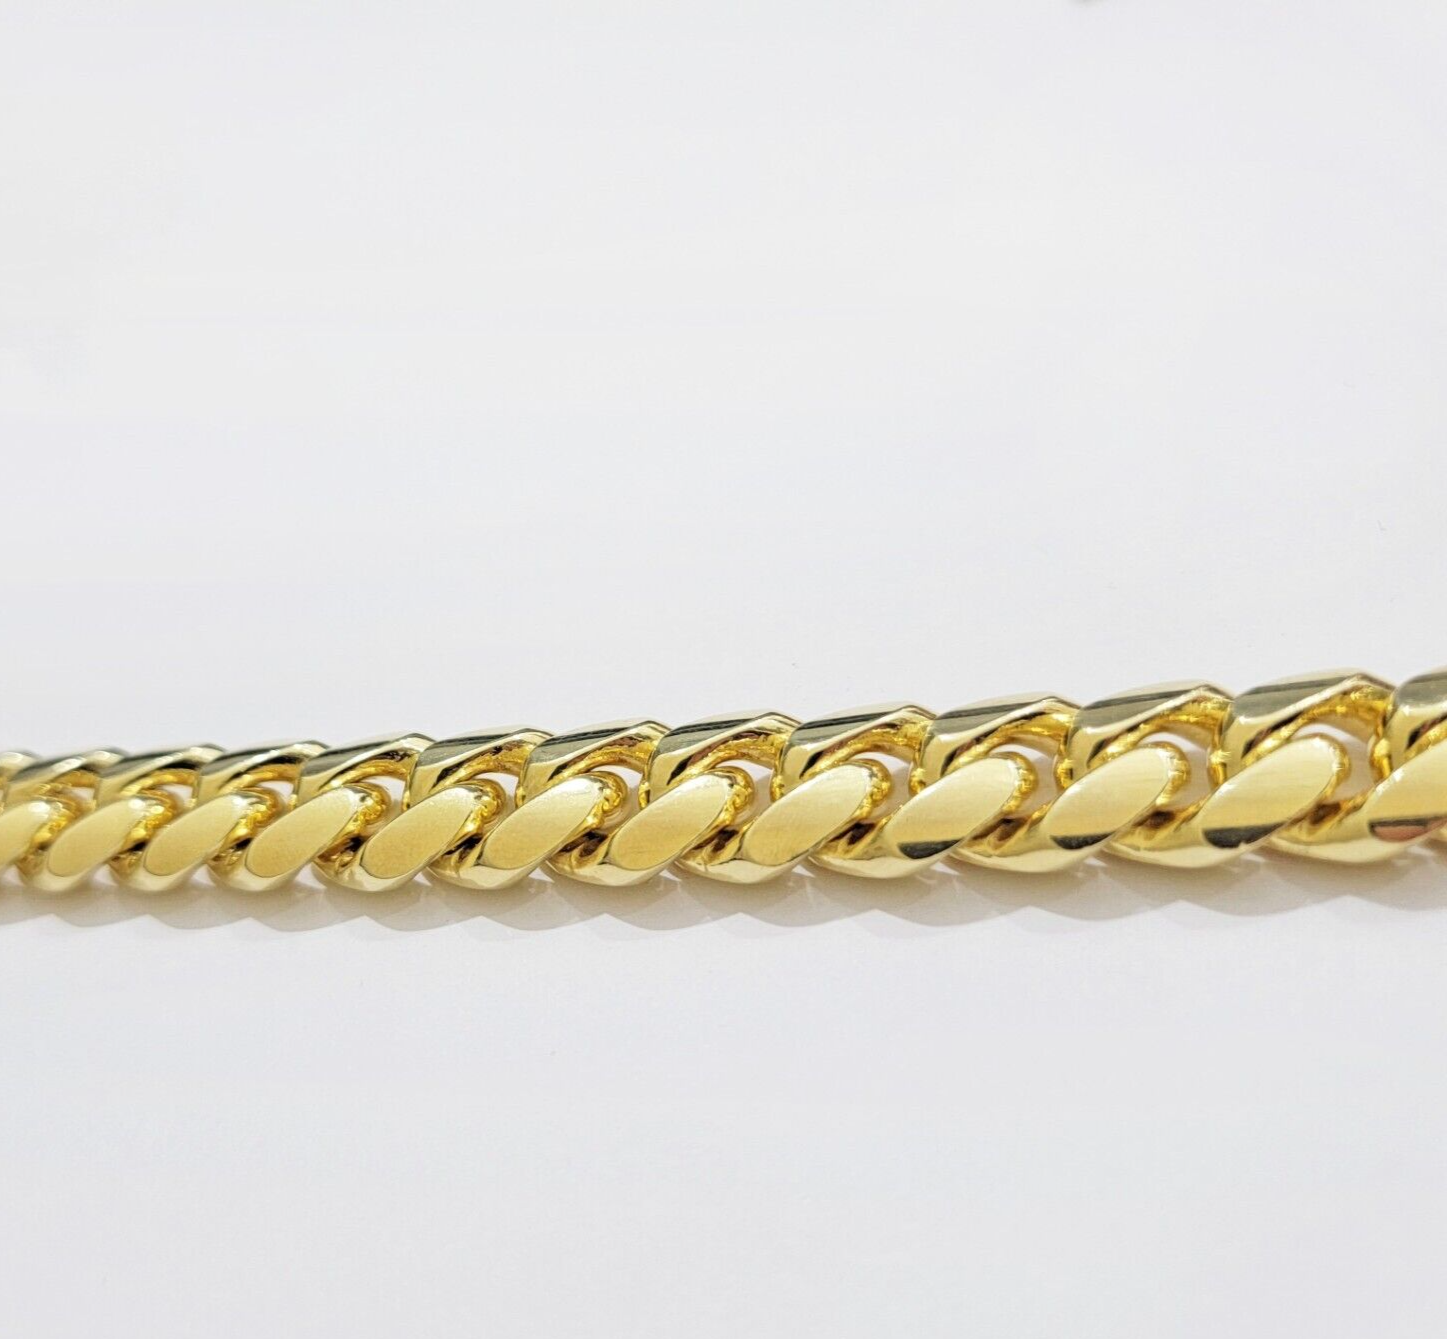 Mens 14k Gold Bracelet Solid Miami Cuban Link 13mm 9.5 Inch Real 14kt Heavy